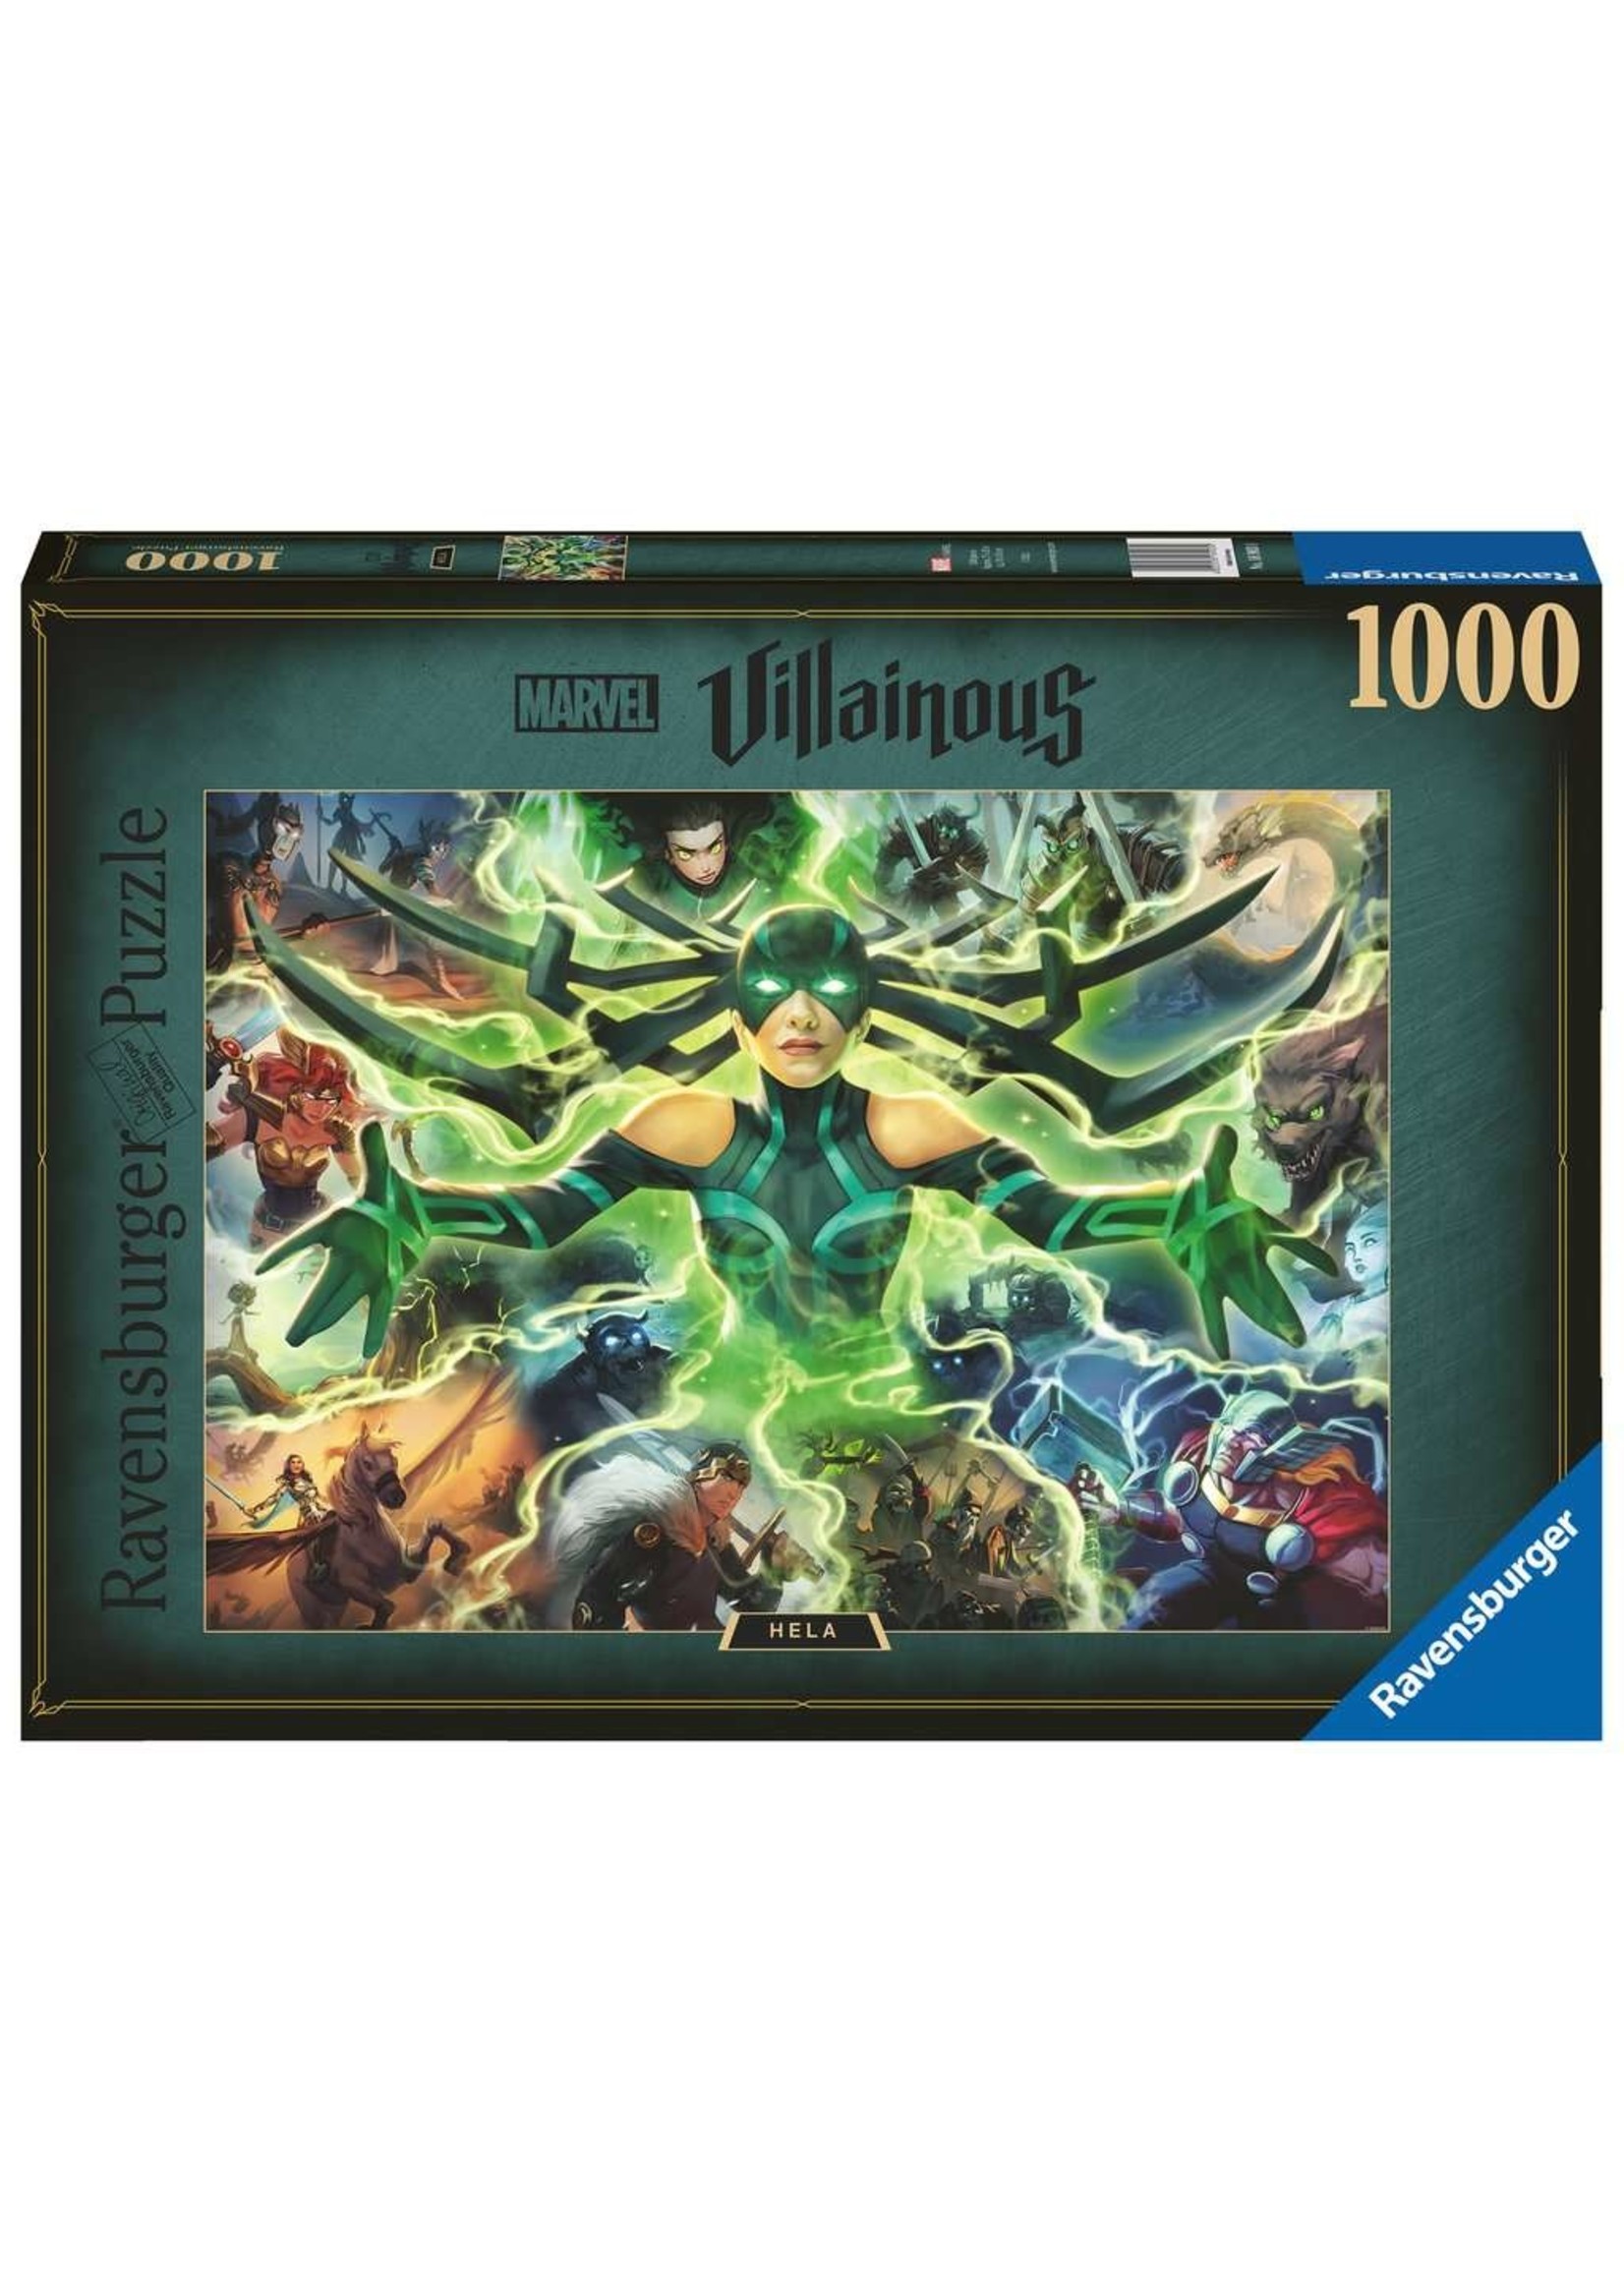 Ravensburger Puzzle Ravensburger 1000 pcs Villainous Marvel - Hela